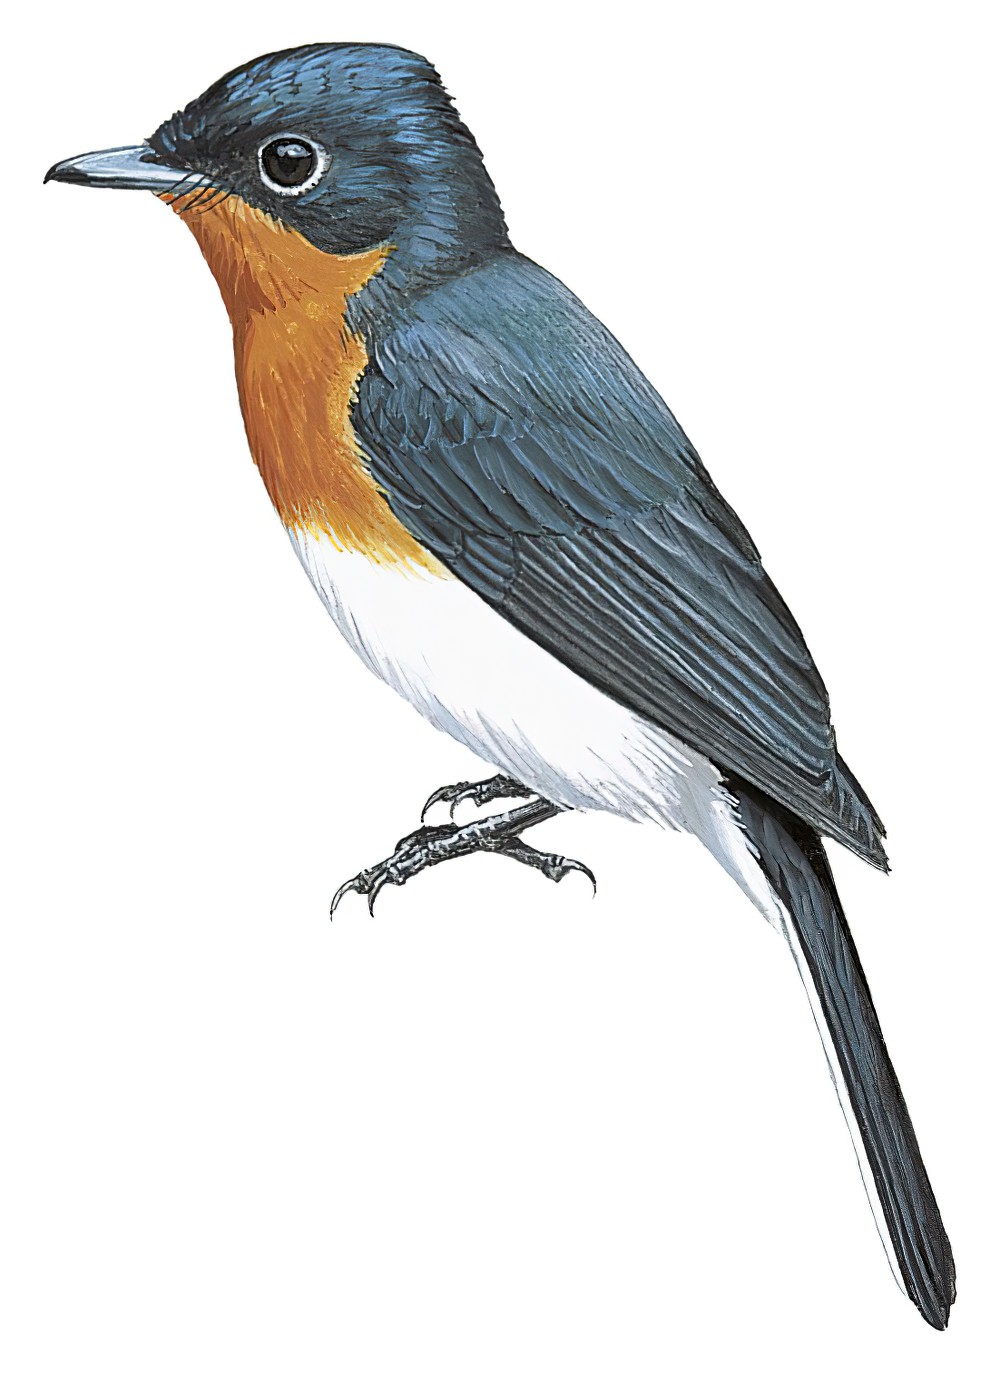 Broad-billed Flycatcher / Myiagra ruficollis